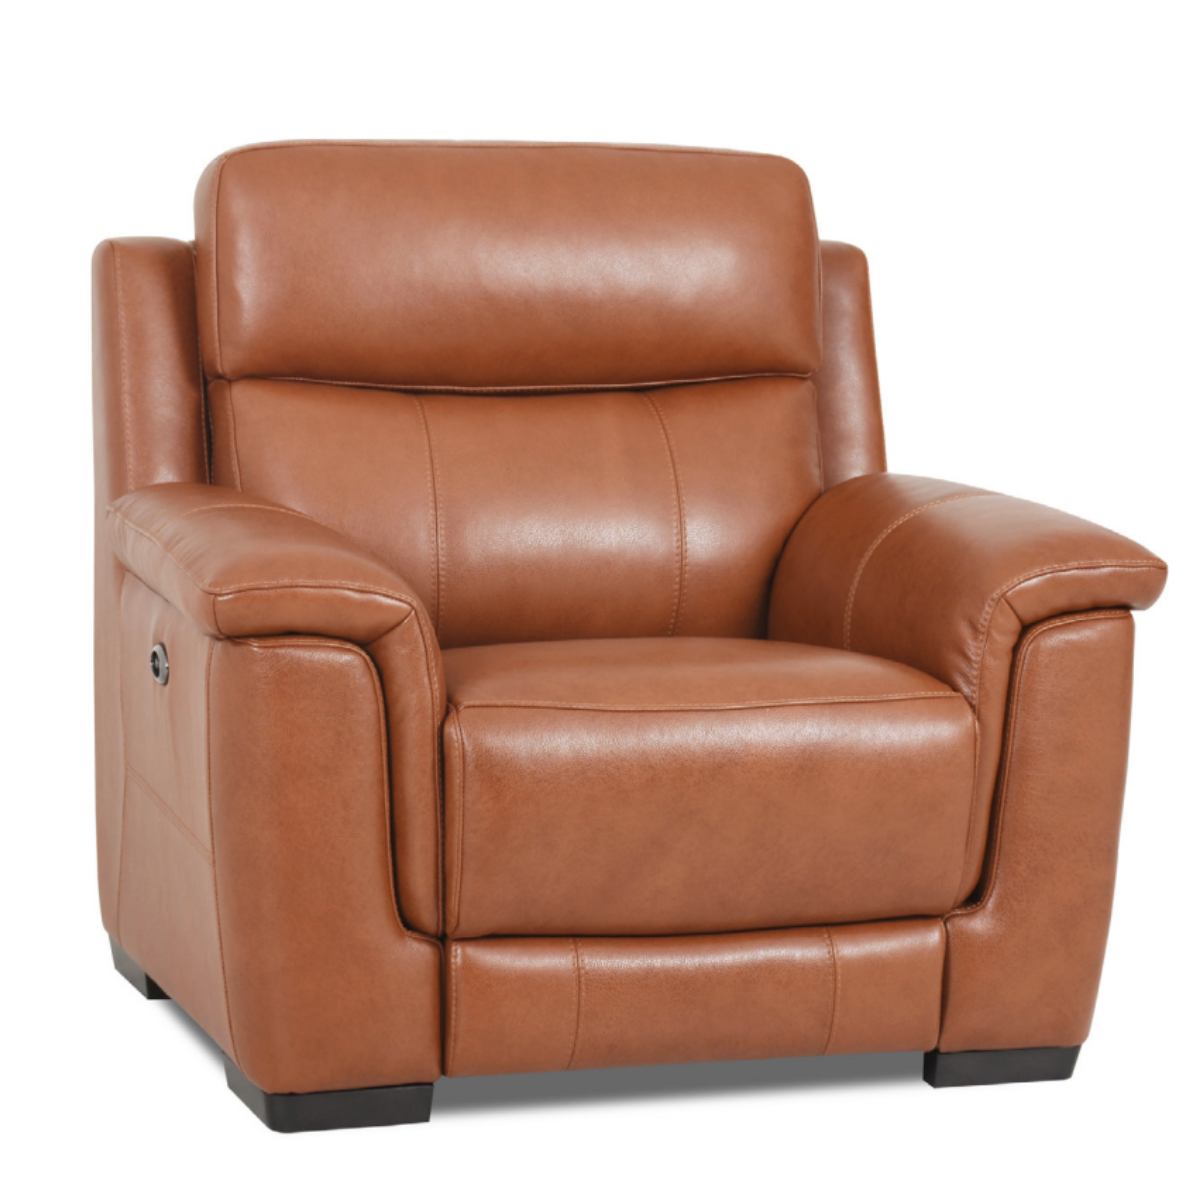 Preston Recliner Armchair - Pecan Brown Leather